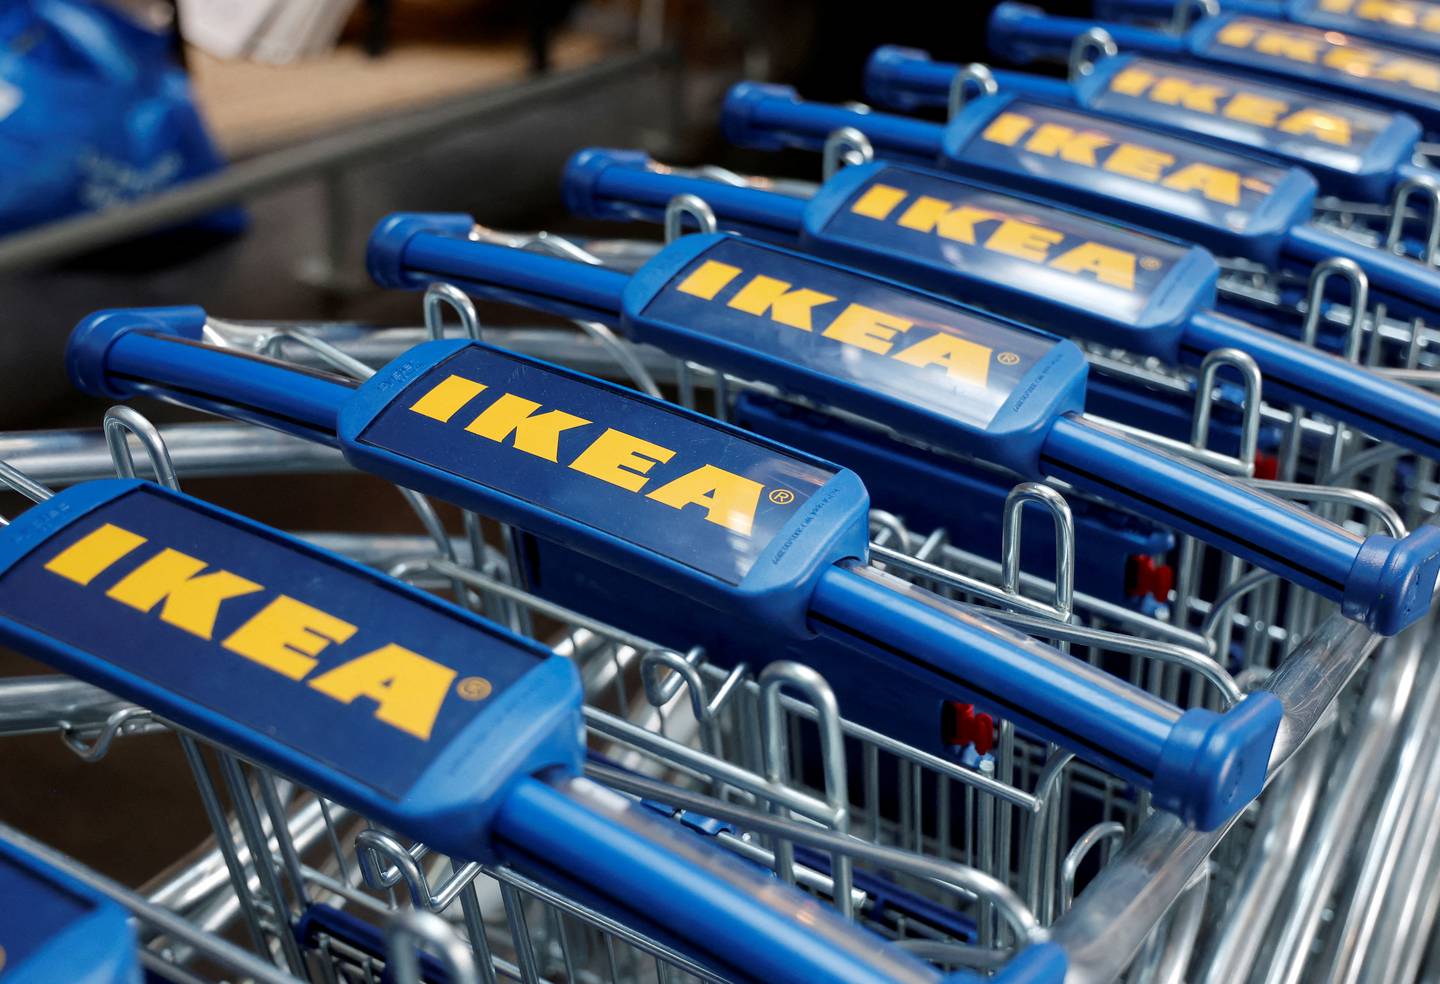 The famous blue Ikea trolleys. Reuters